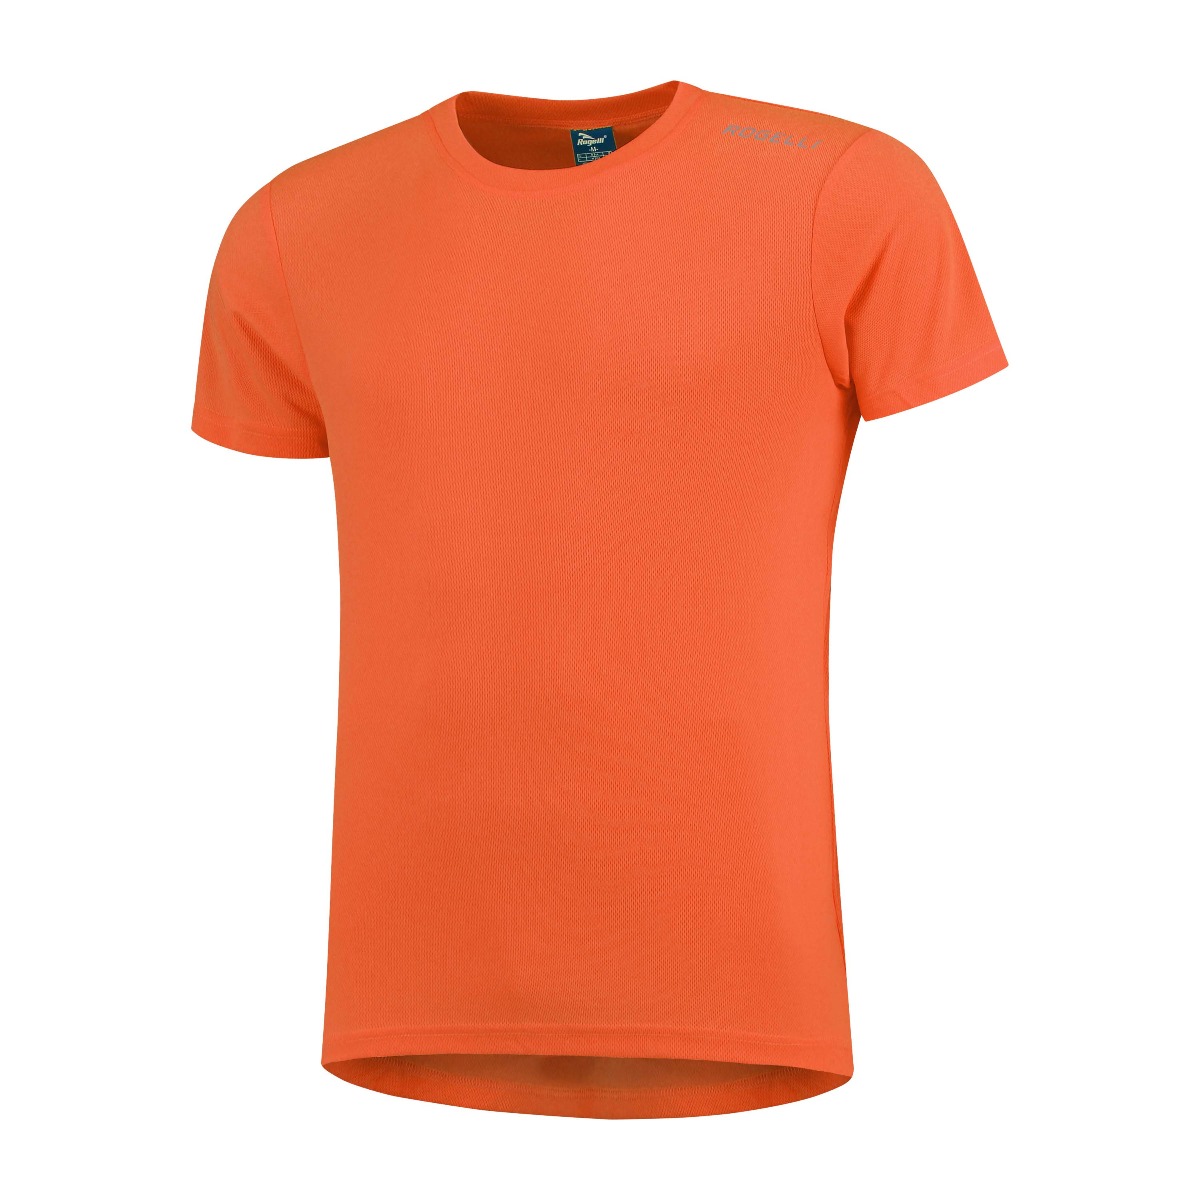 800-225_01_PROMO_tshirt_orange